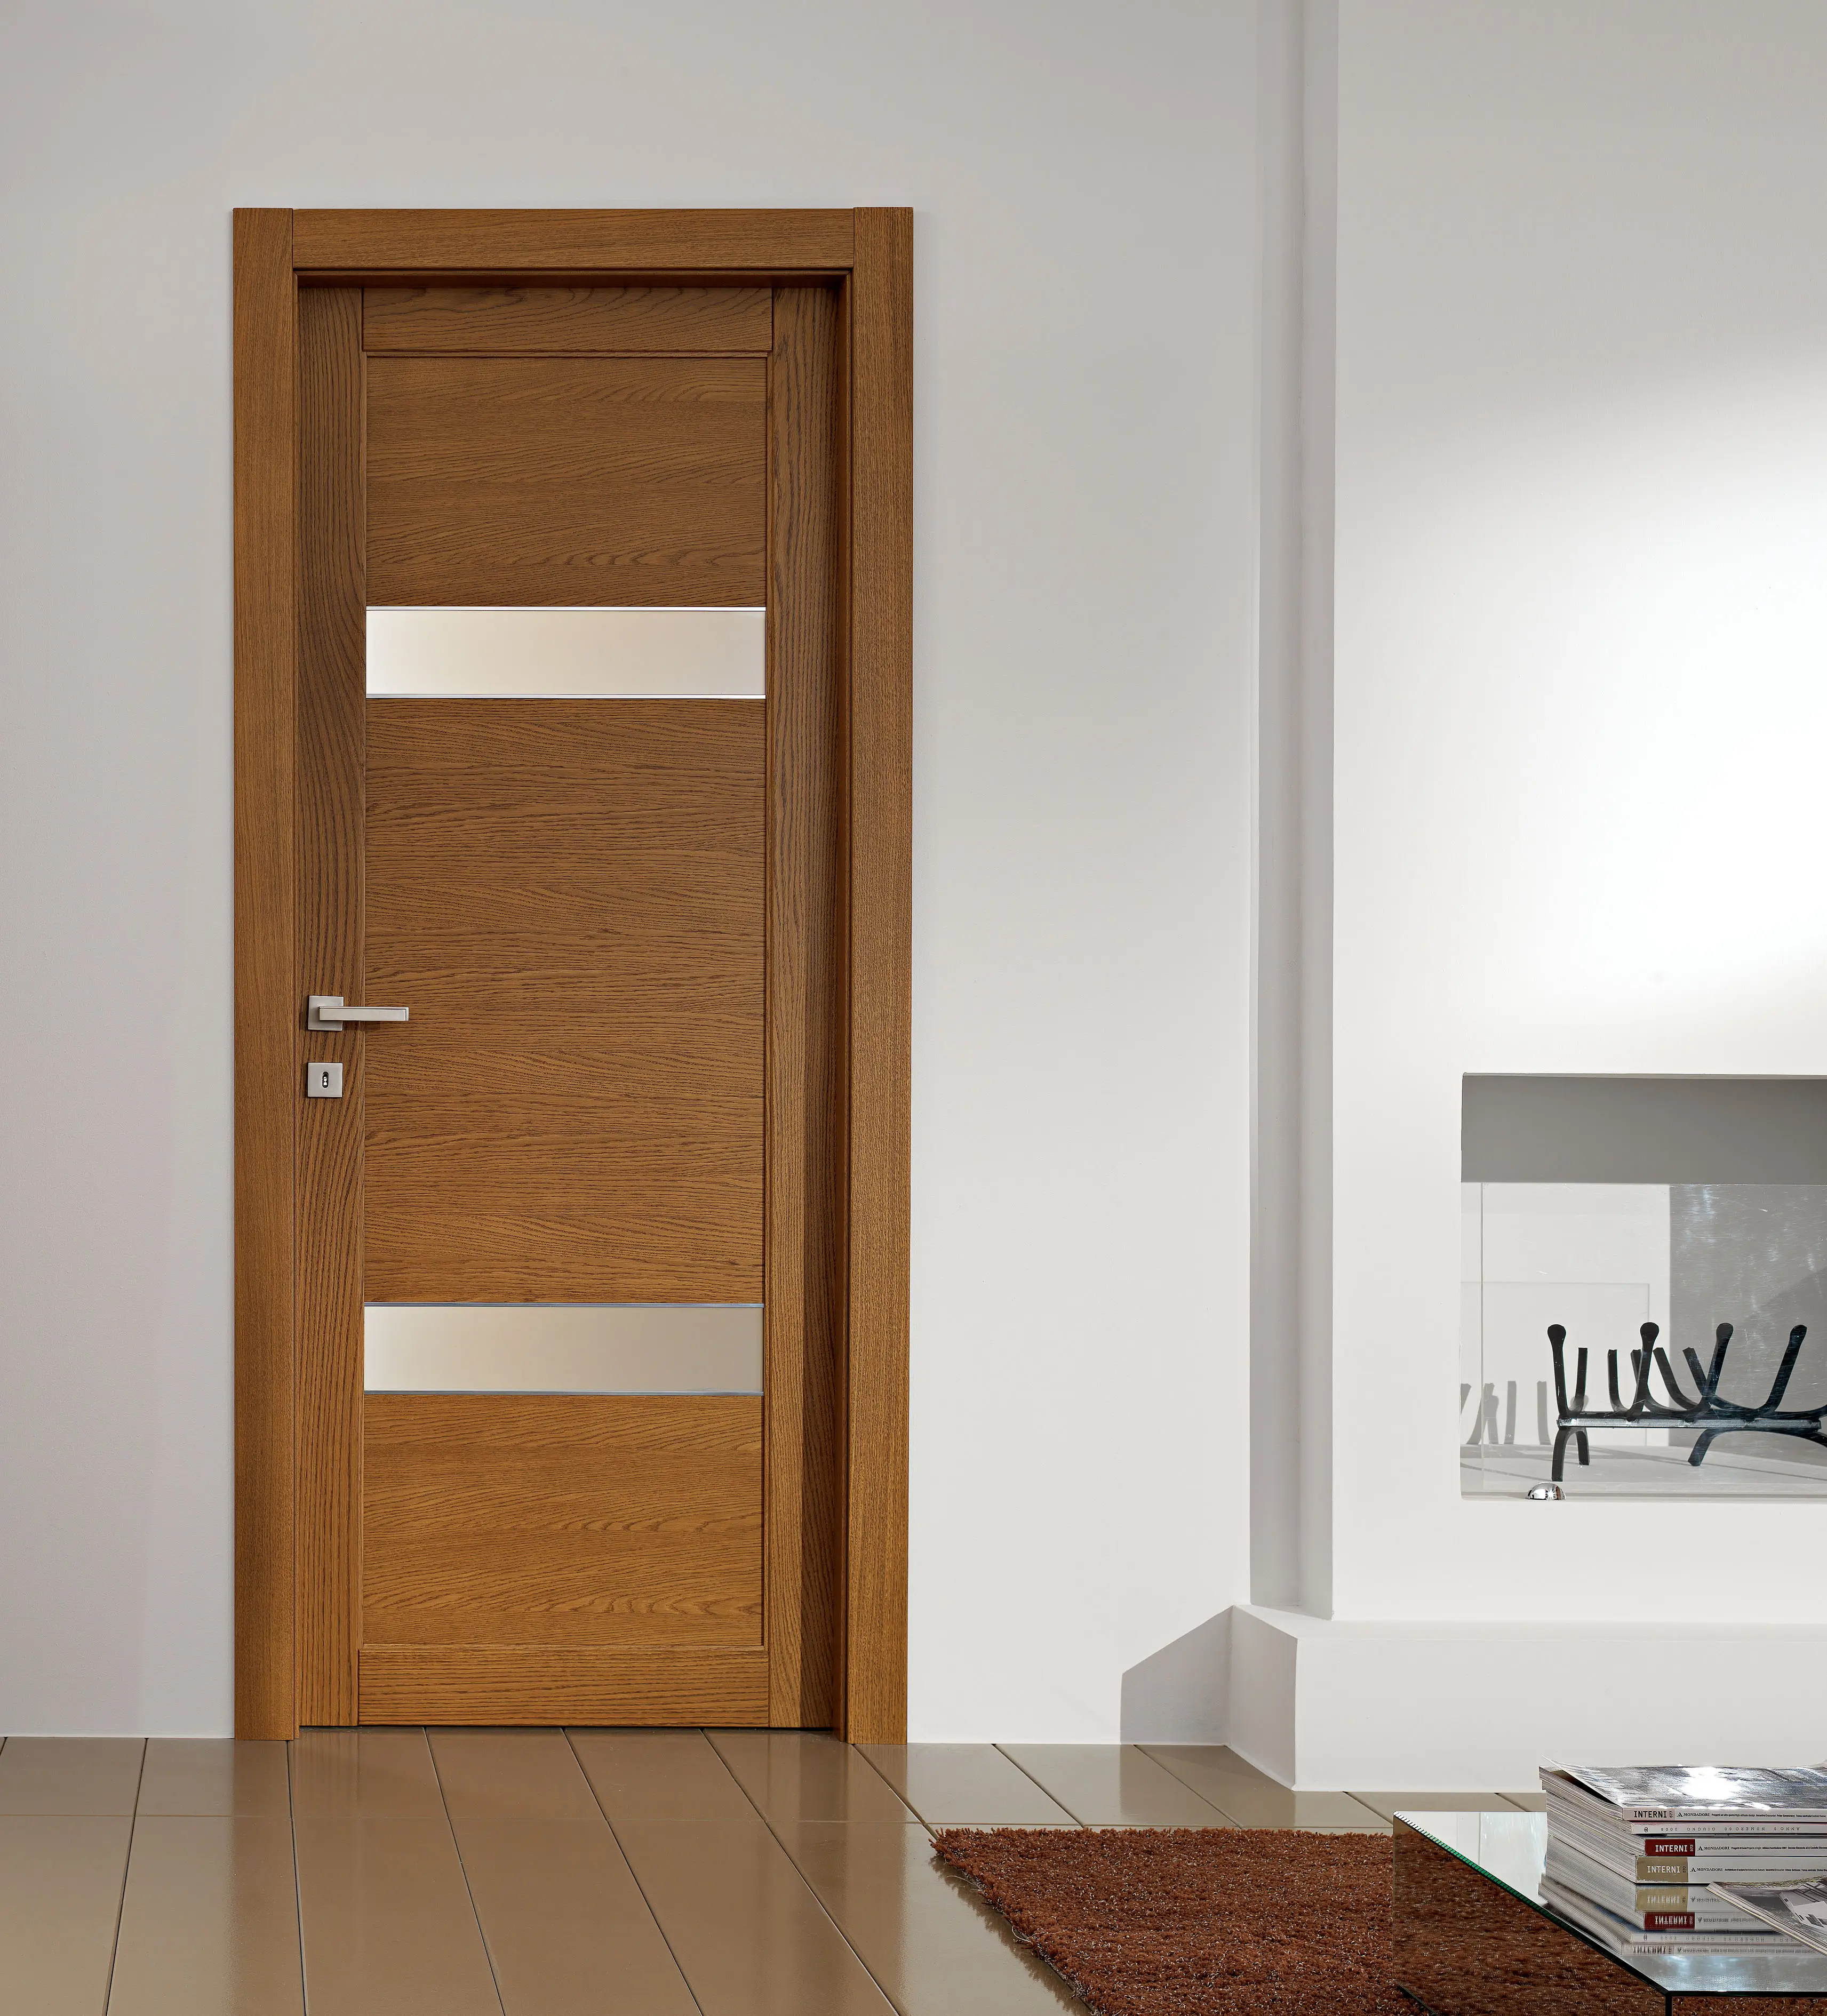 Lingyinモダン木製ドアデザイン木製ドア写真メインドアモデル